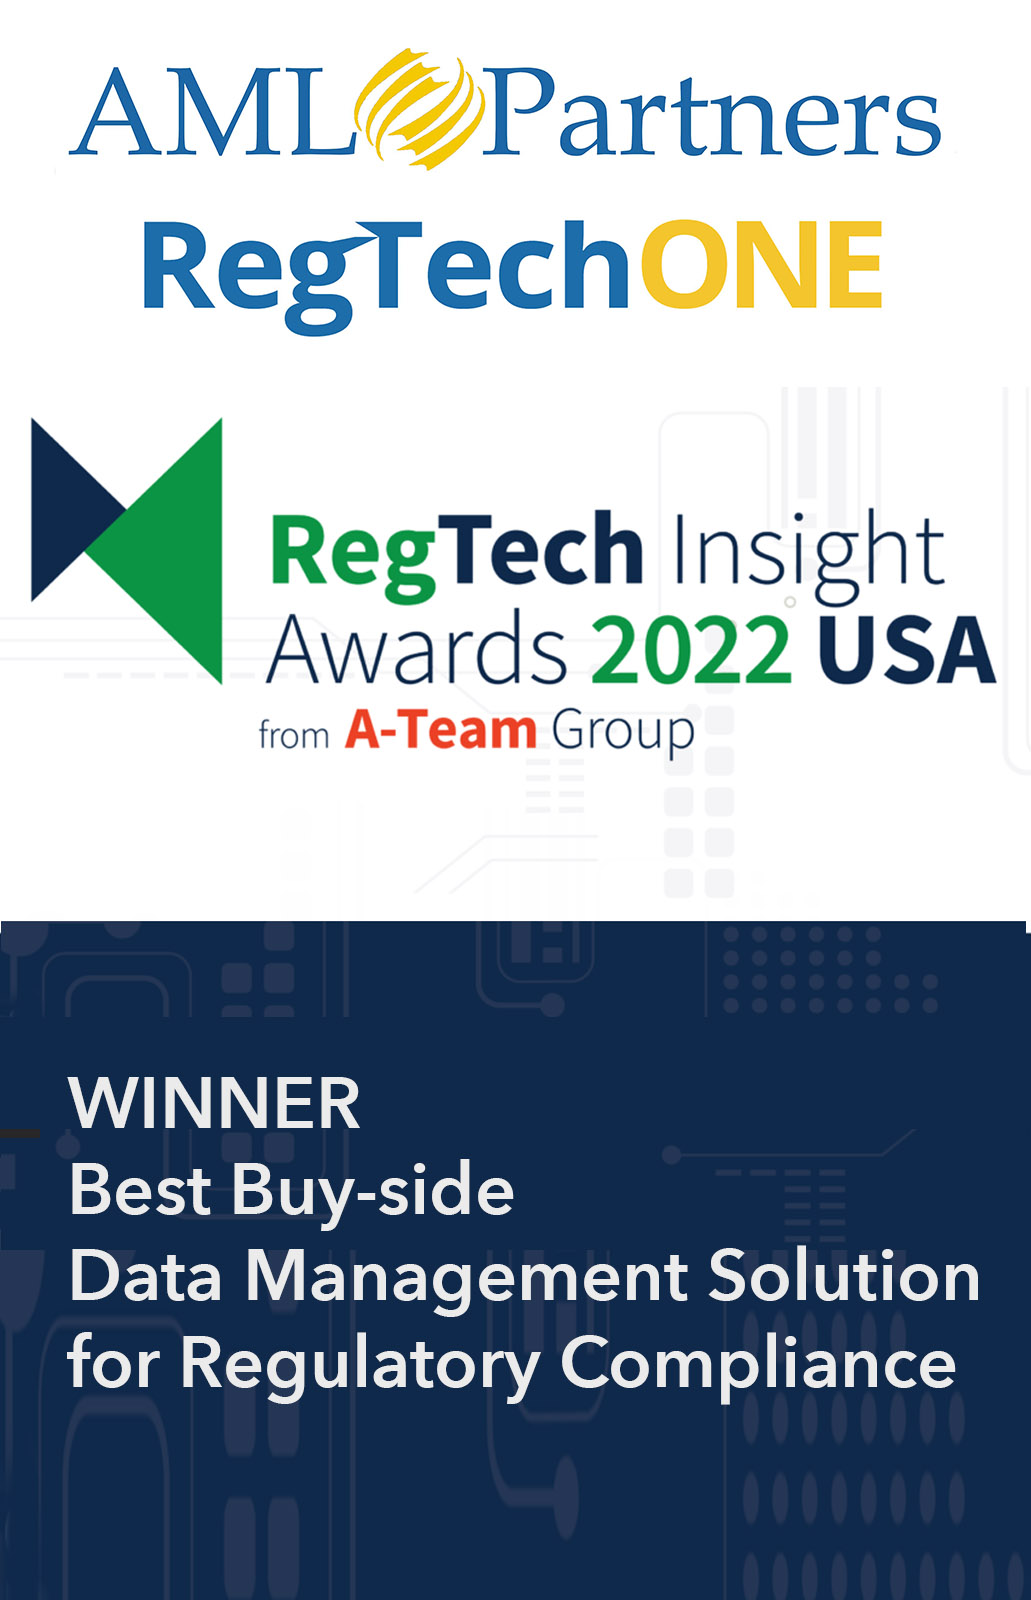 RegTechInsight Award 2022--AML Partners and RegTechONE. RegTechONE software platform for AML software, GRC software, AML solutions, KYC software, KYC solutions.